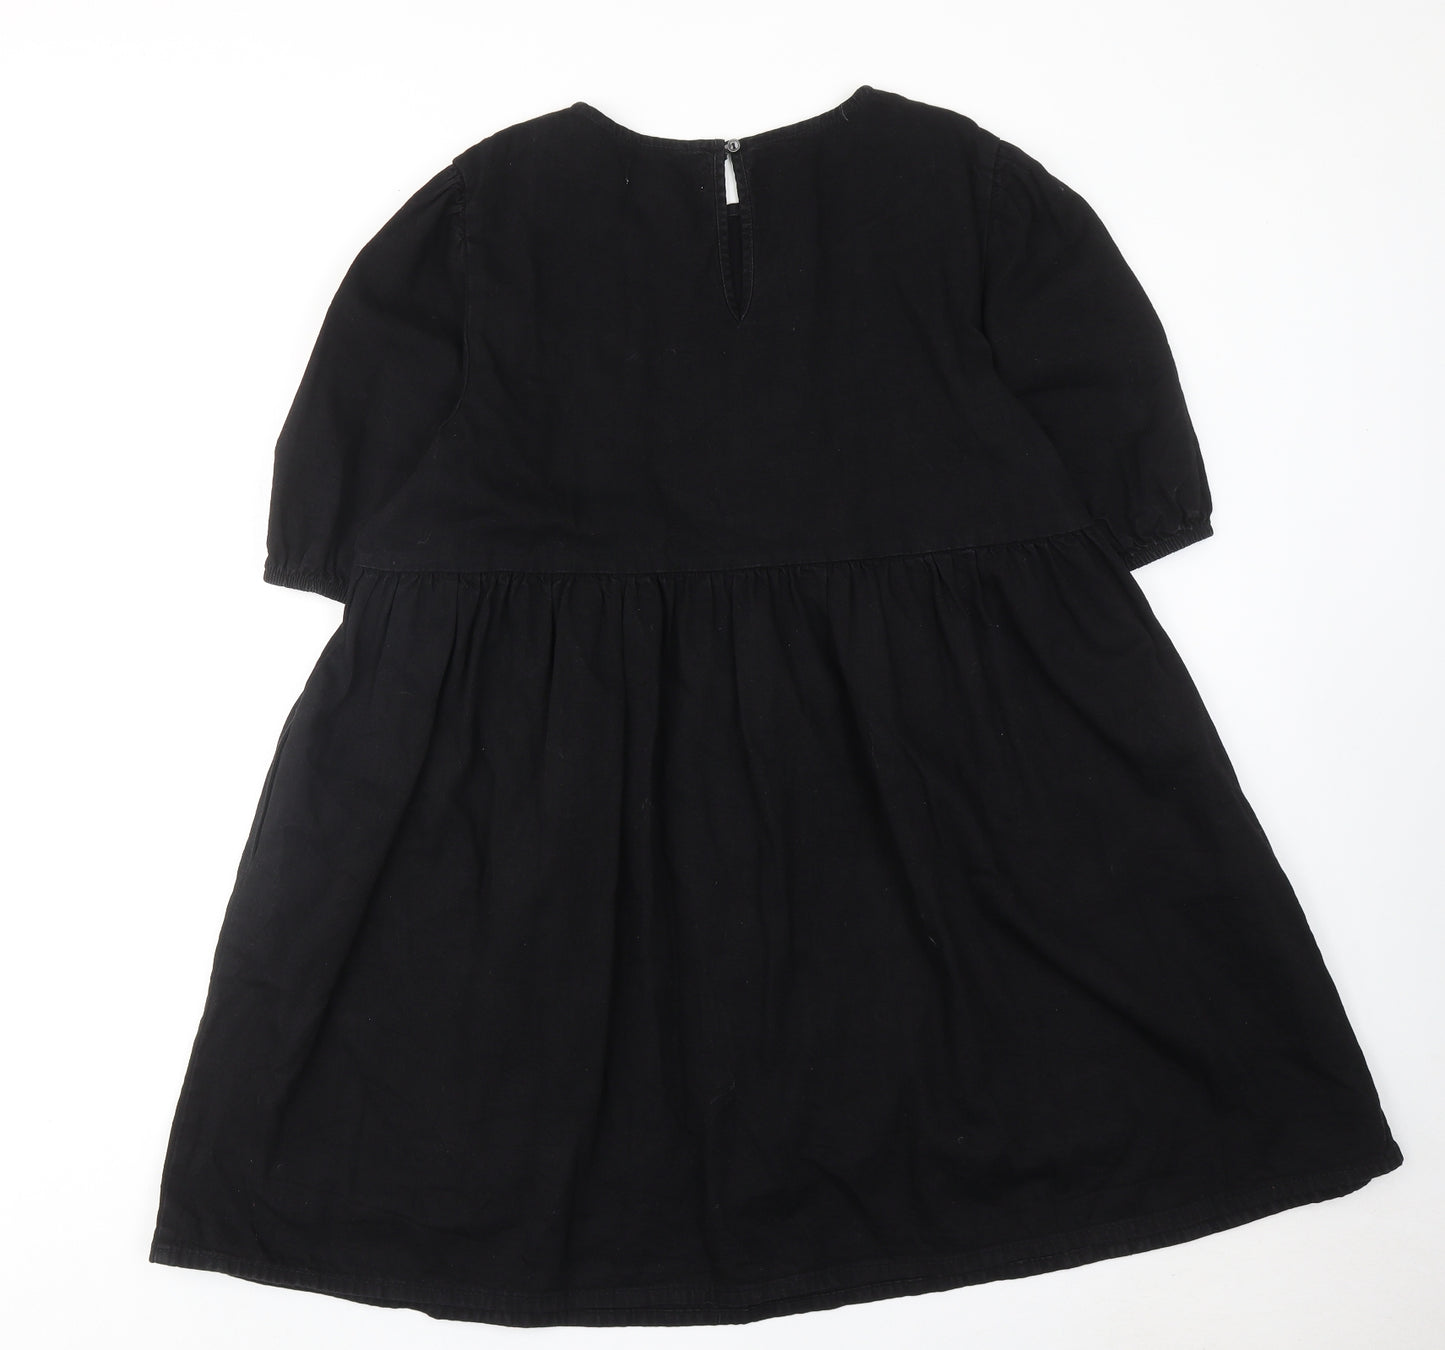 New Look Womens Black Cotton Skater Dress Size 18 Round Neck Button